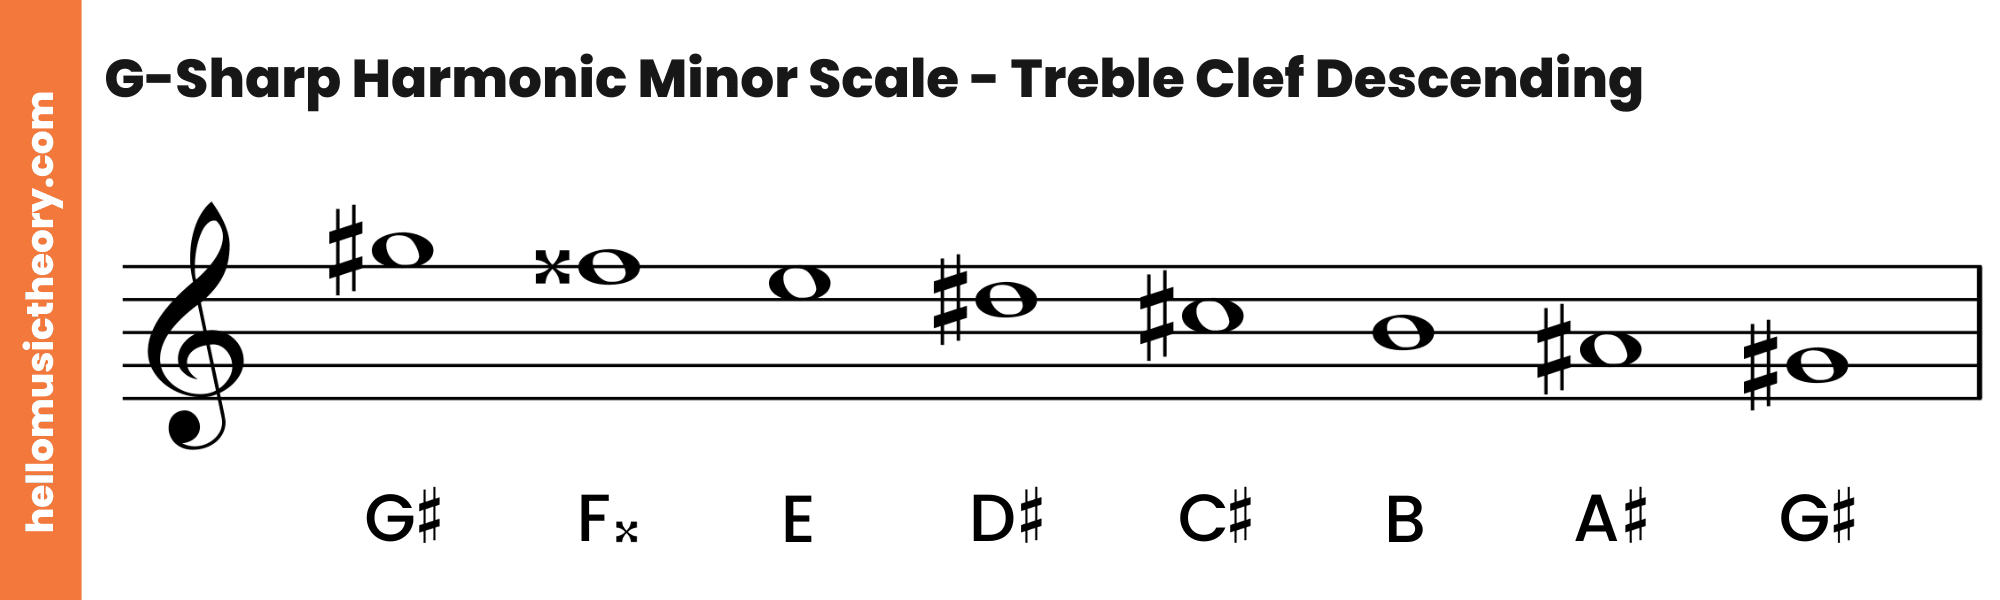 G-Sharp Harmonic Minor Scale Treble Clef Descending